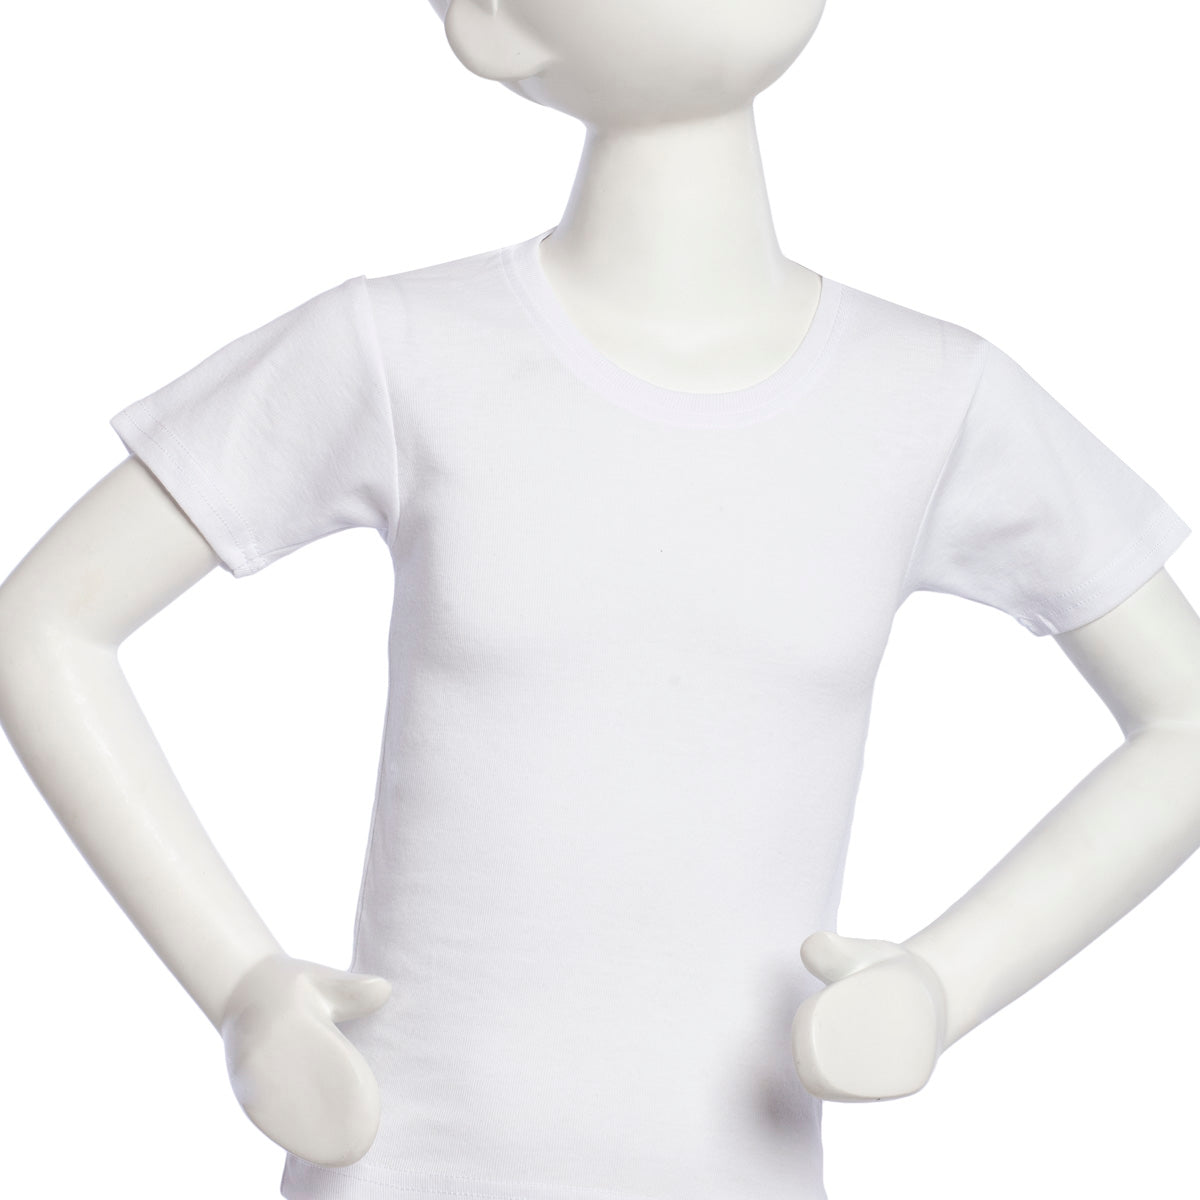 Camiseta niña manga corta blanca